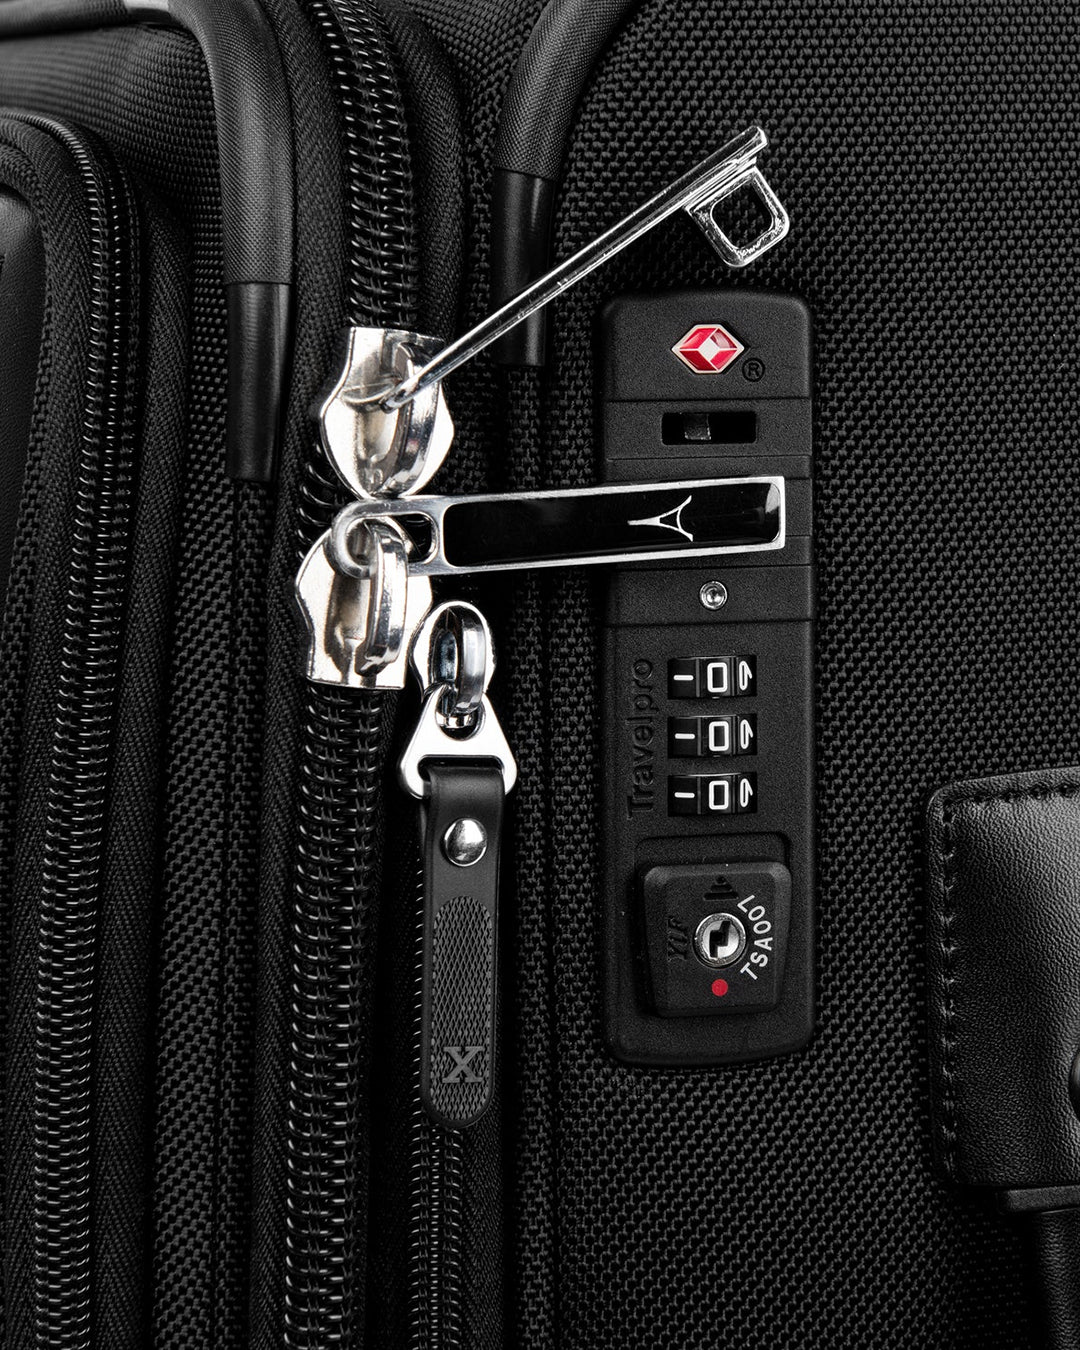 Travelpro Platinum® Elite International Carry-On Expandable Spinner